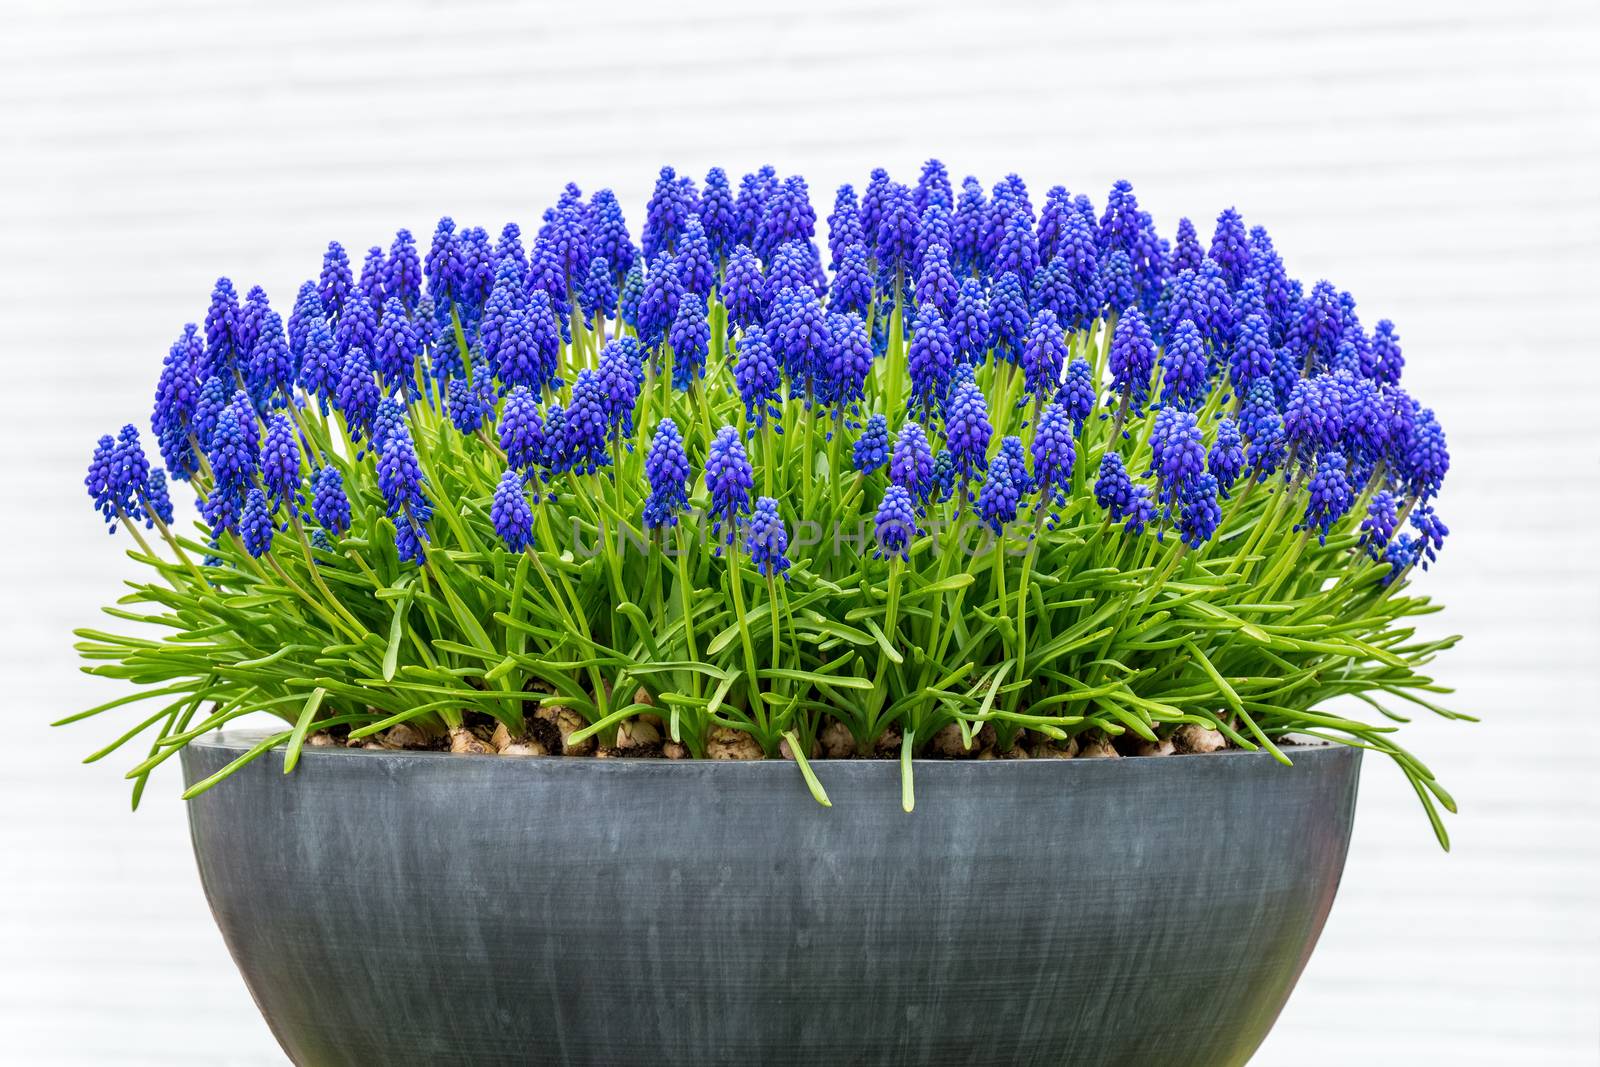 Grey metal flower box with blue grape hyacinthsf